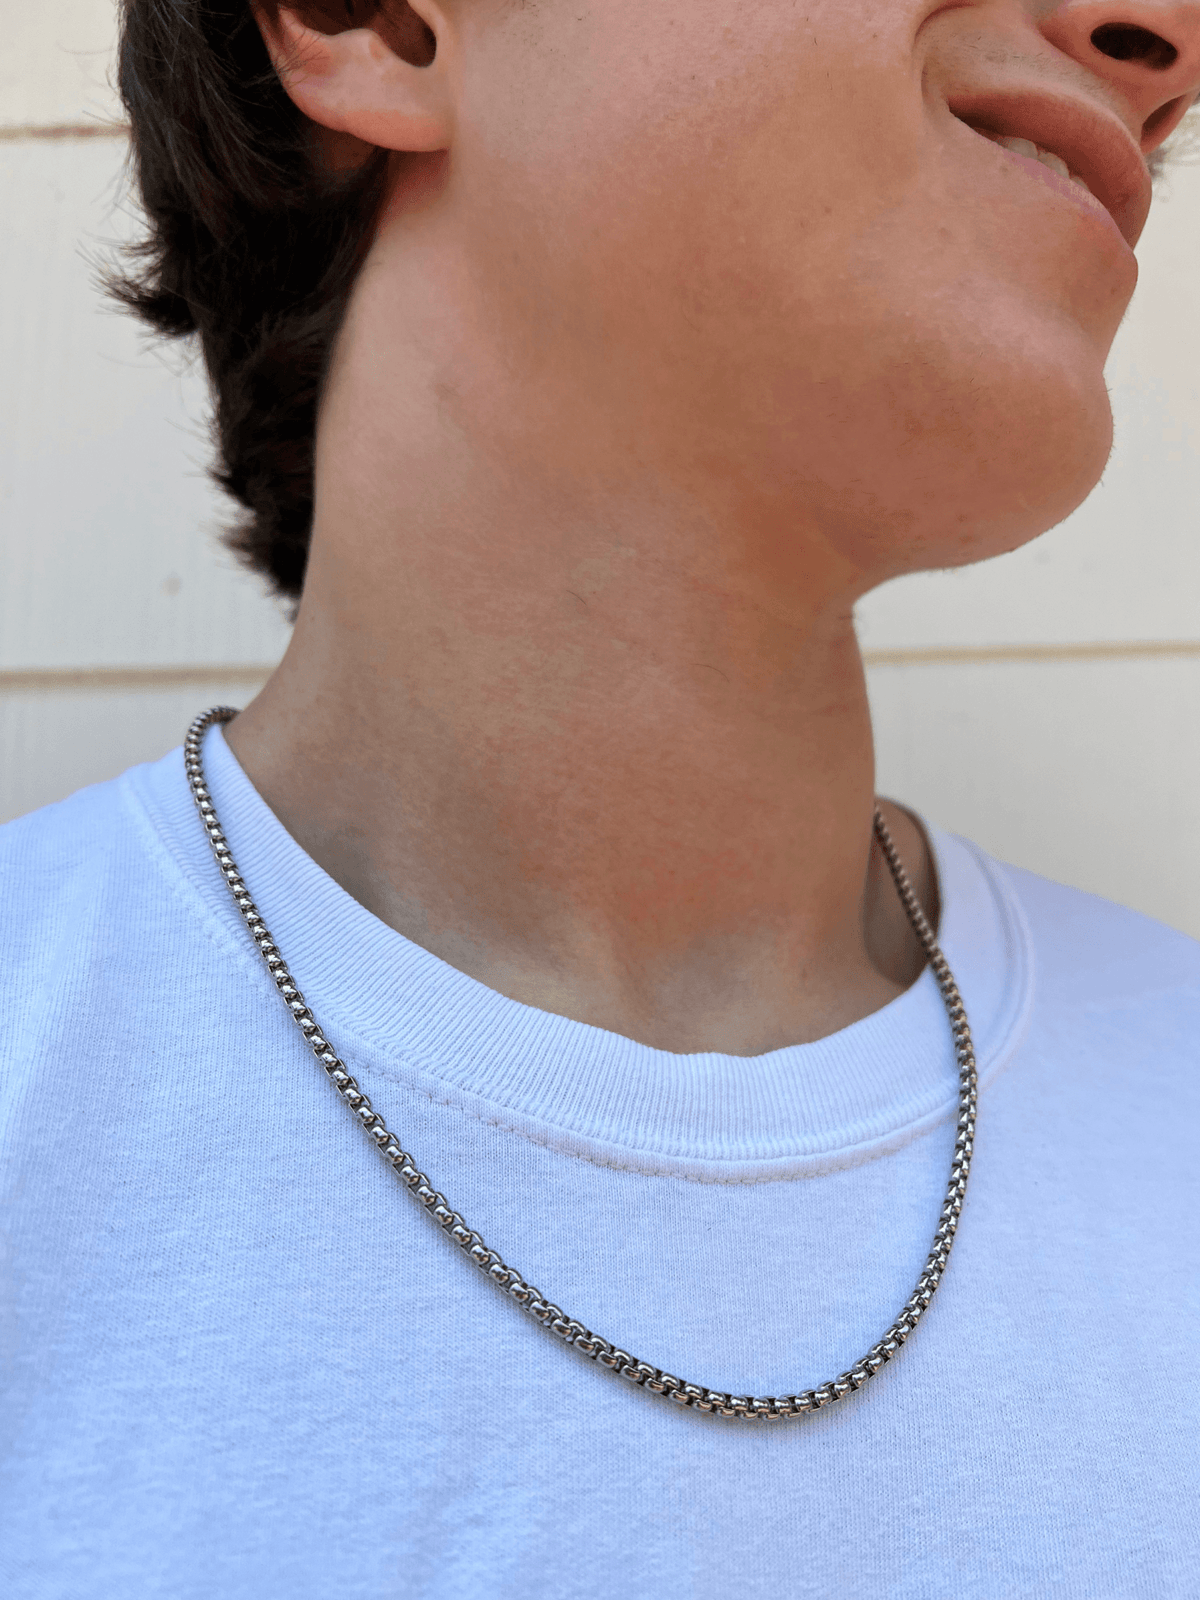 Men's Silver Box Chain Necklace - LeMel